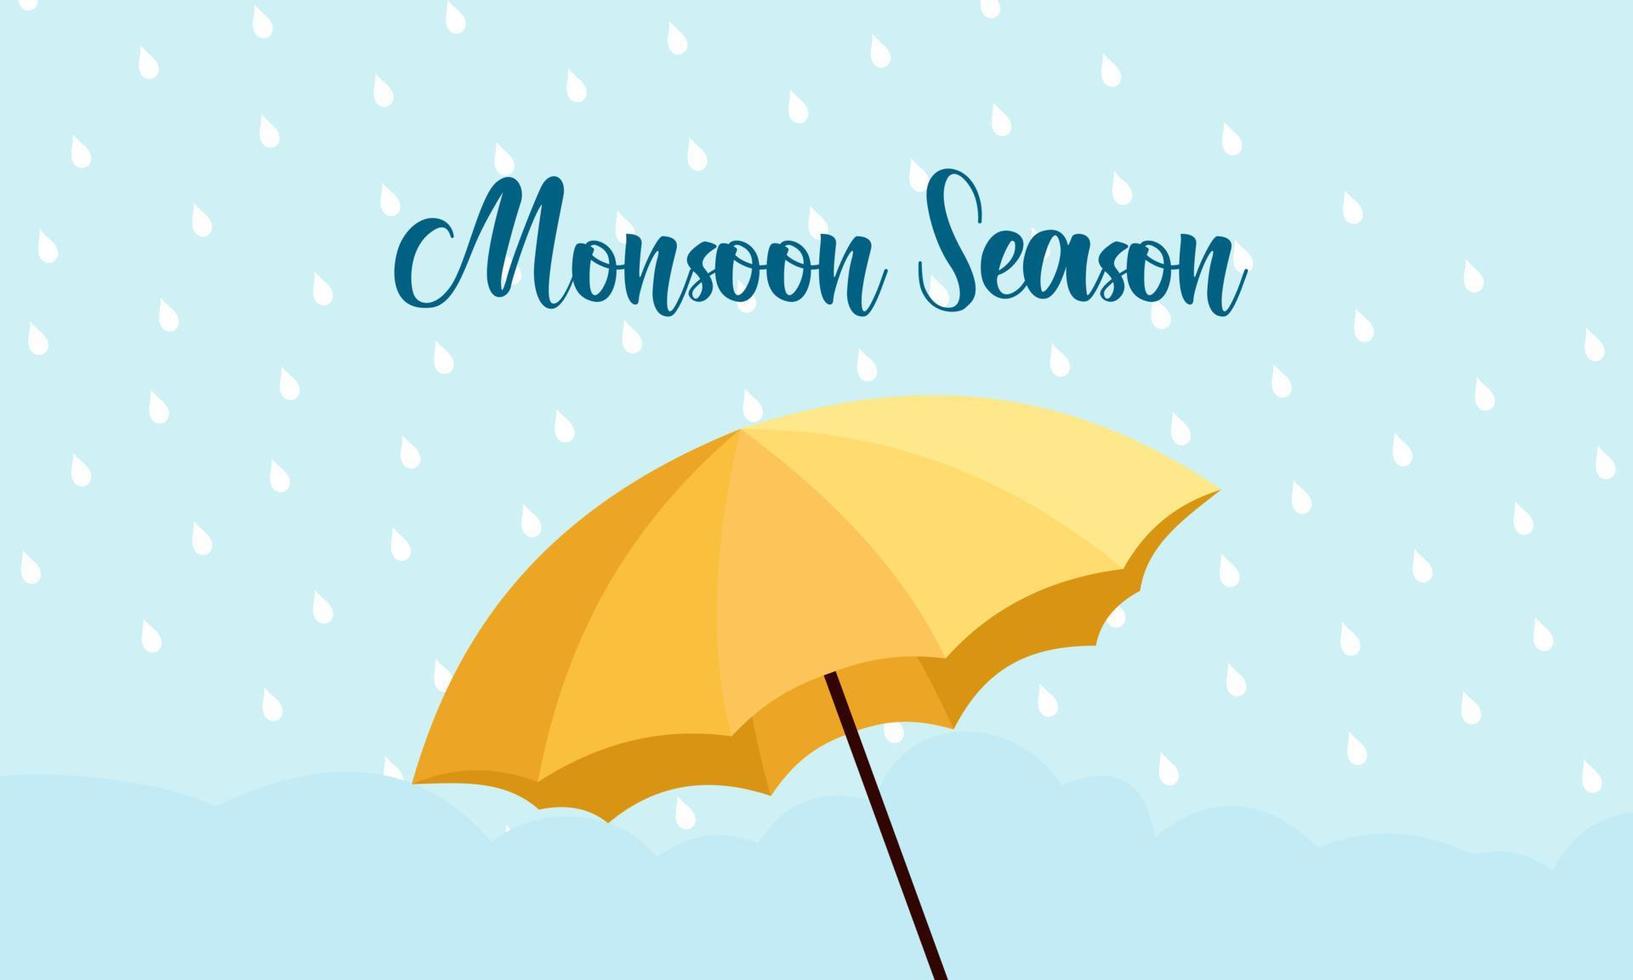 Monsoon season composition with flat design vector